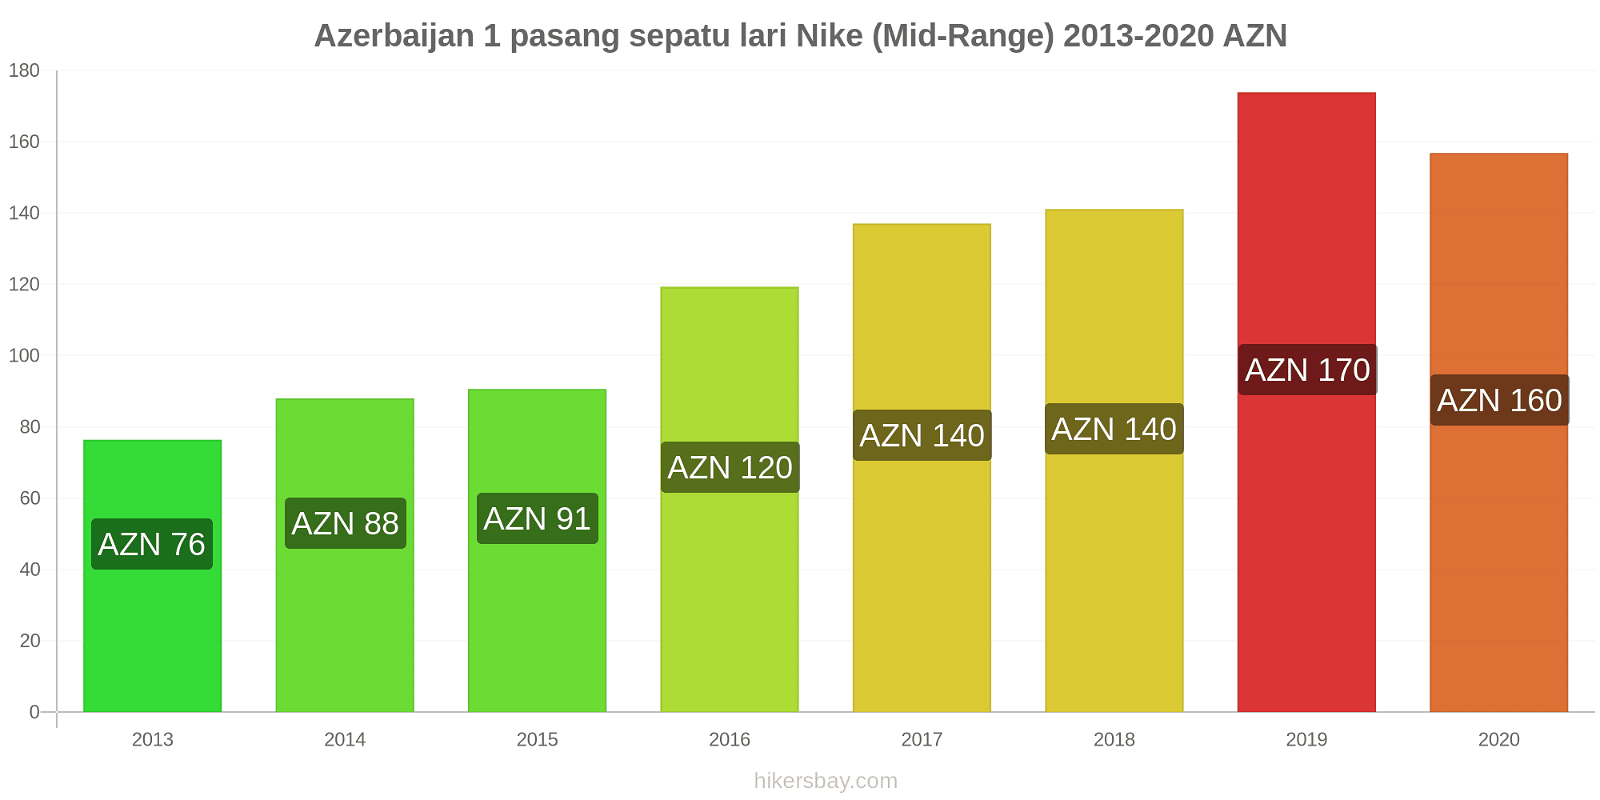 Azerbaijan perubahan harga 1 pasang sepatu lari Nike (Mid-Range) hikersbay.com